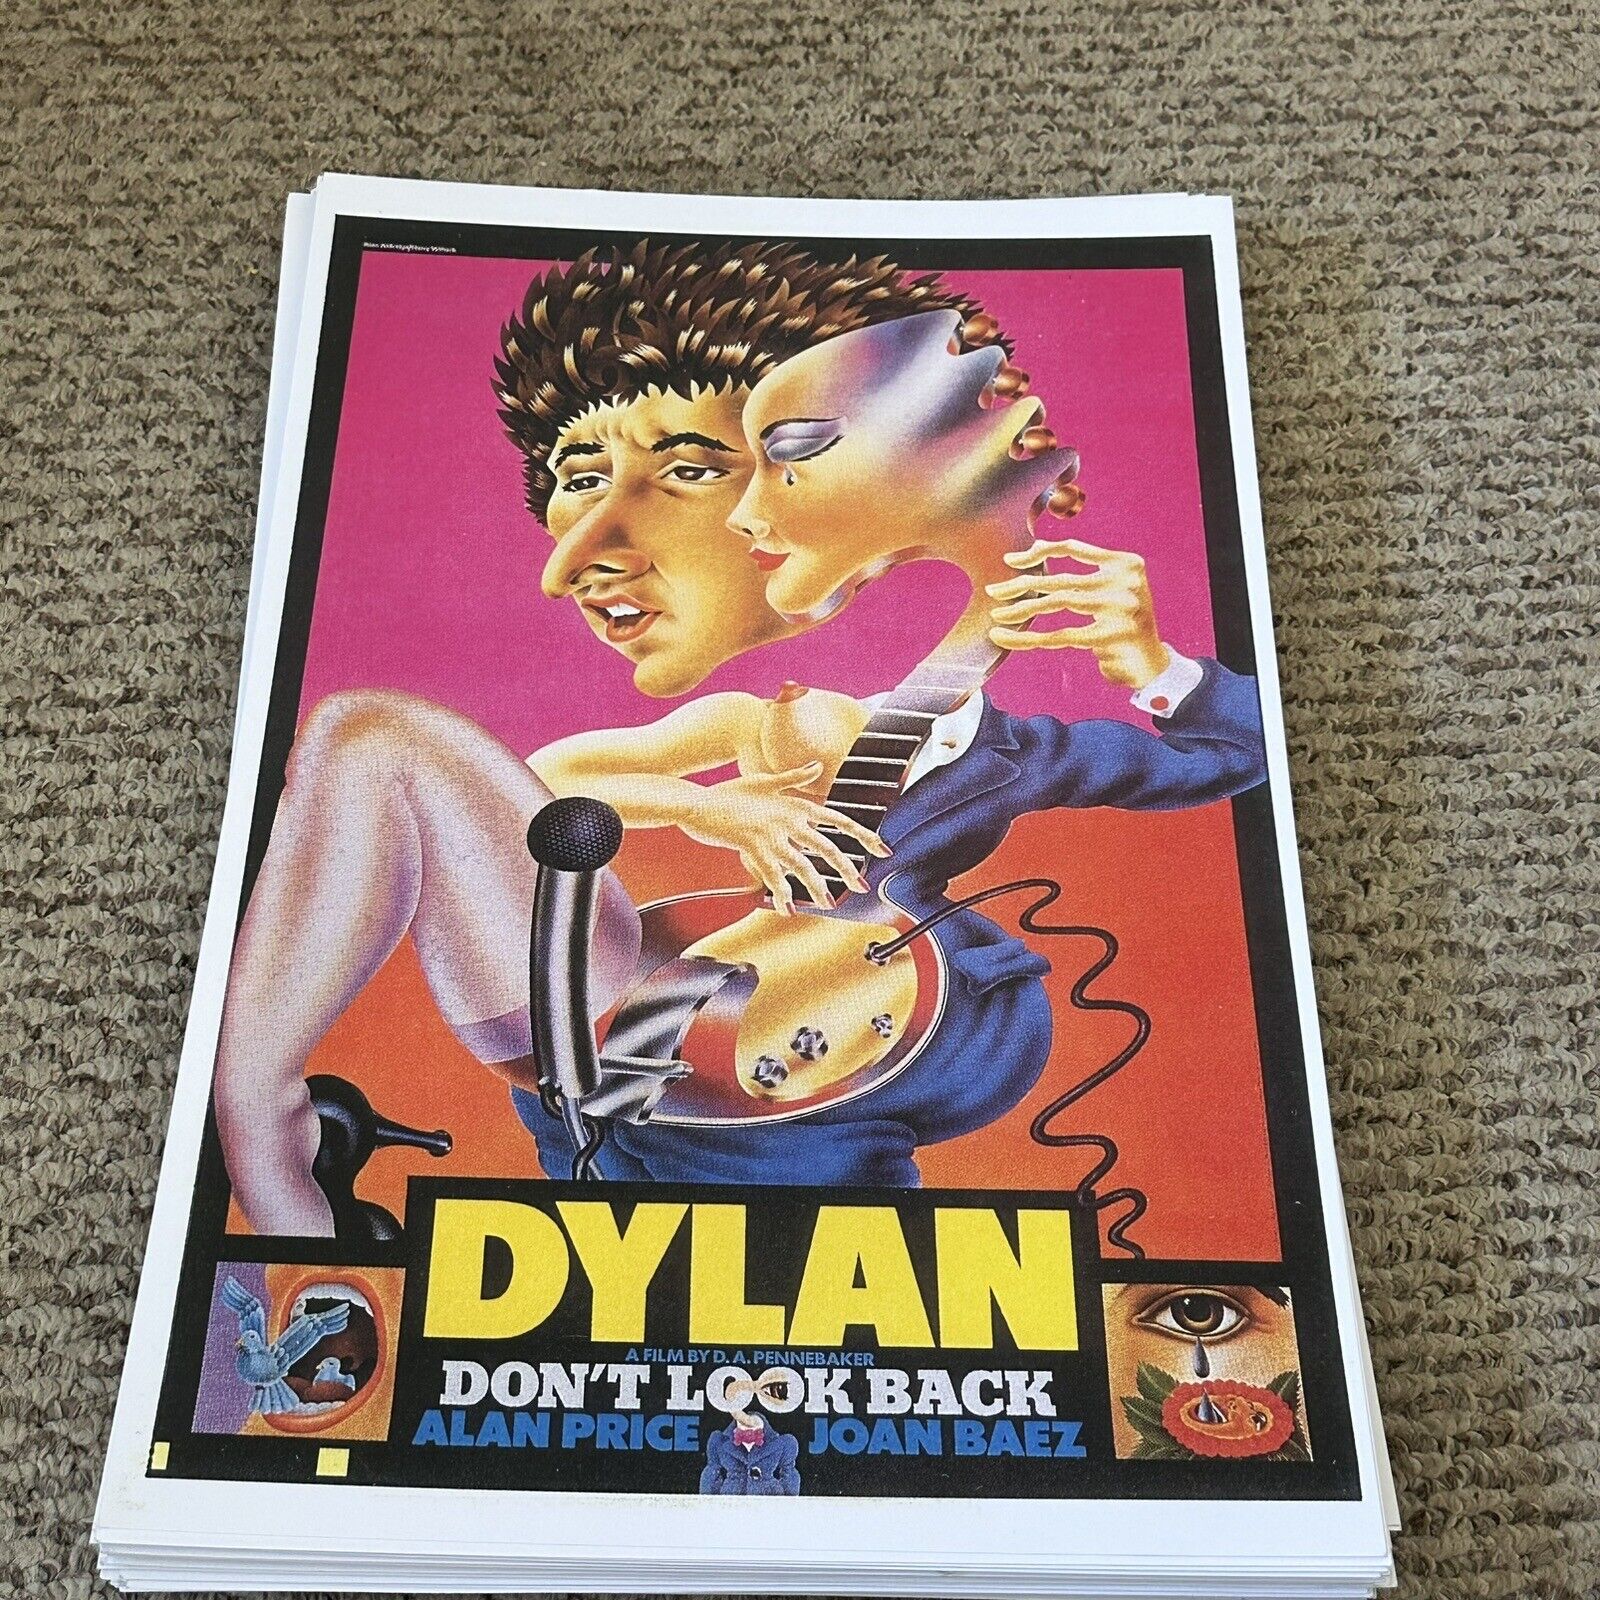 Bob Dylan Don’t Look Back Allen Price Joan Baez Poster 11 x 17 (349)